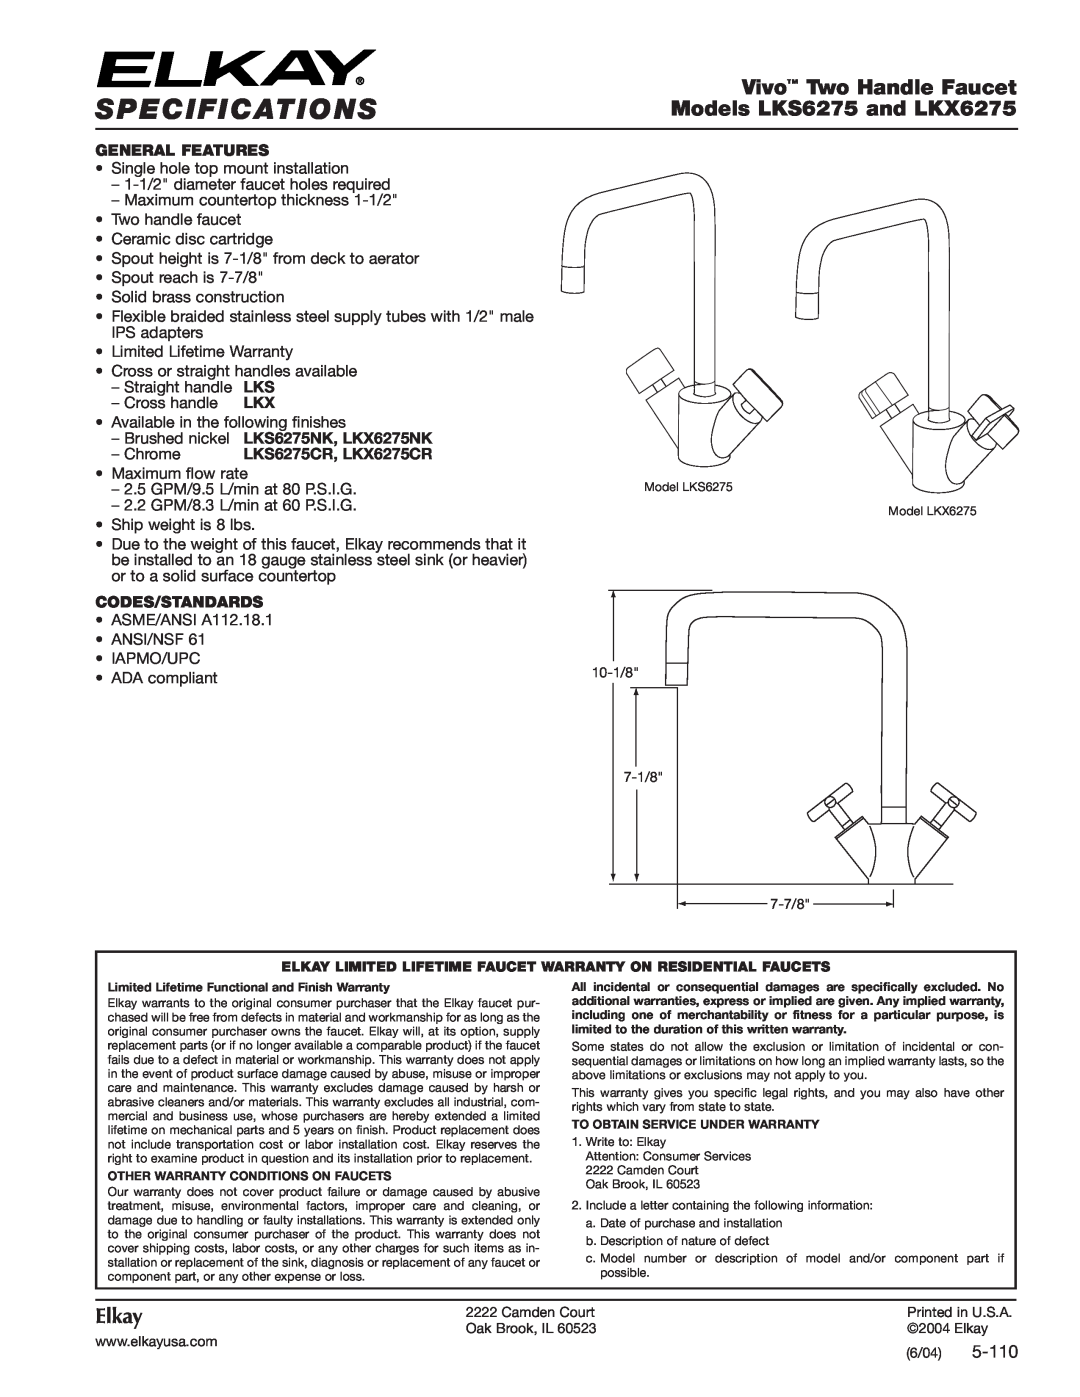 Elkay LKS6275NK, LKS6275CR specifications Specifications, Vivo Two Handle Faucet, Models LKS6275 and LKX6275, Elkay, 5-110 